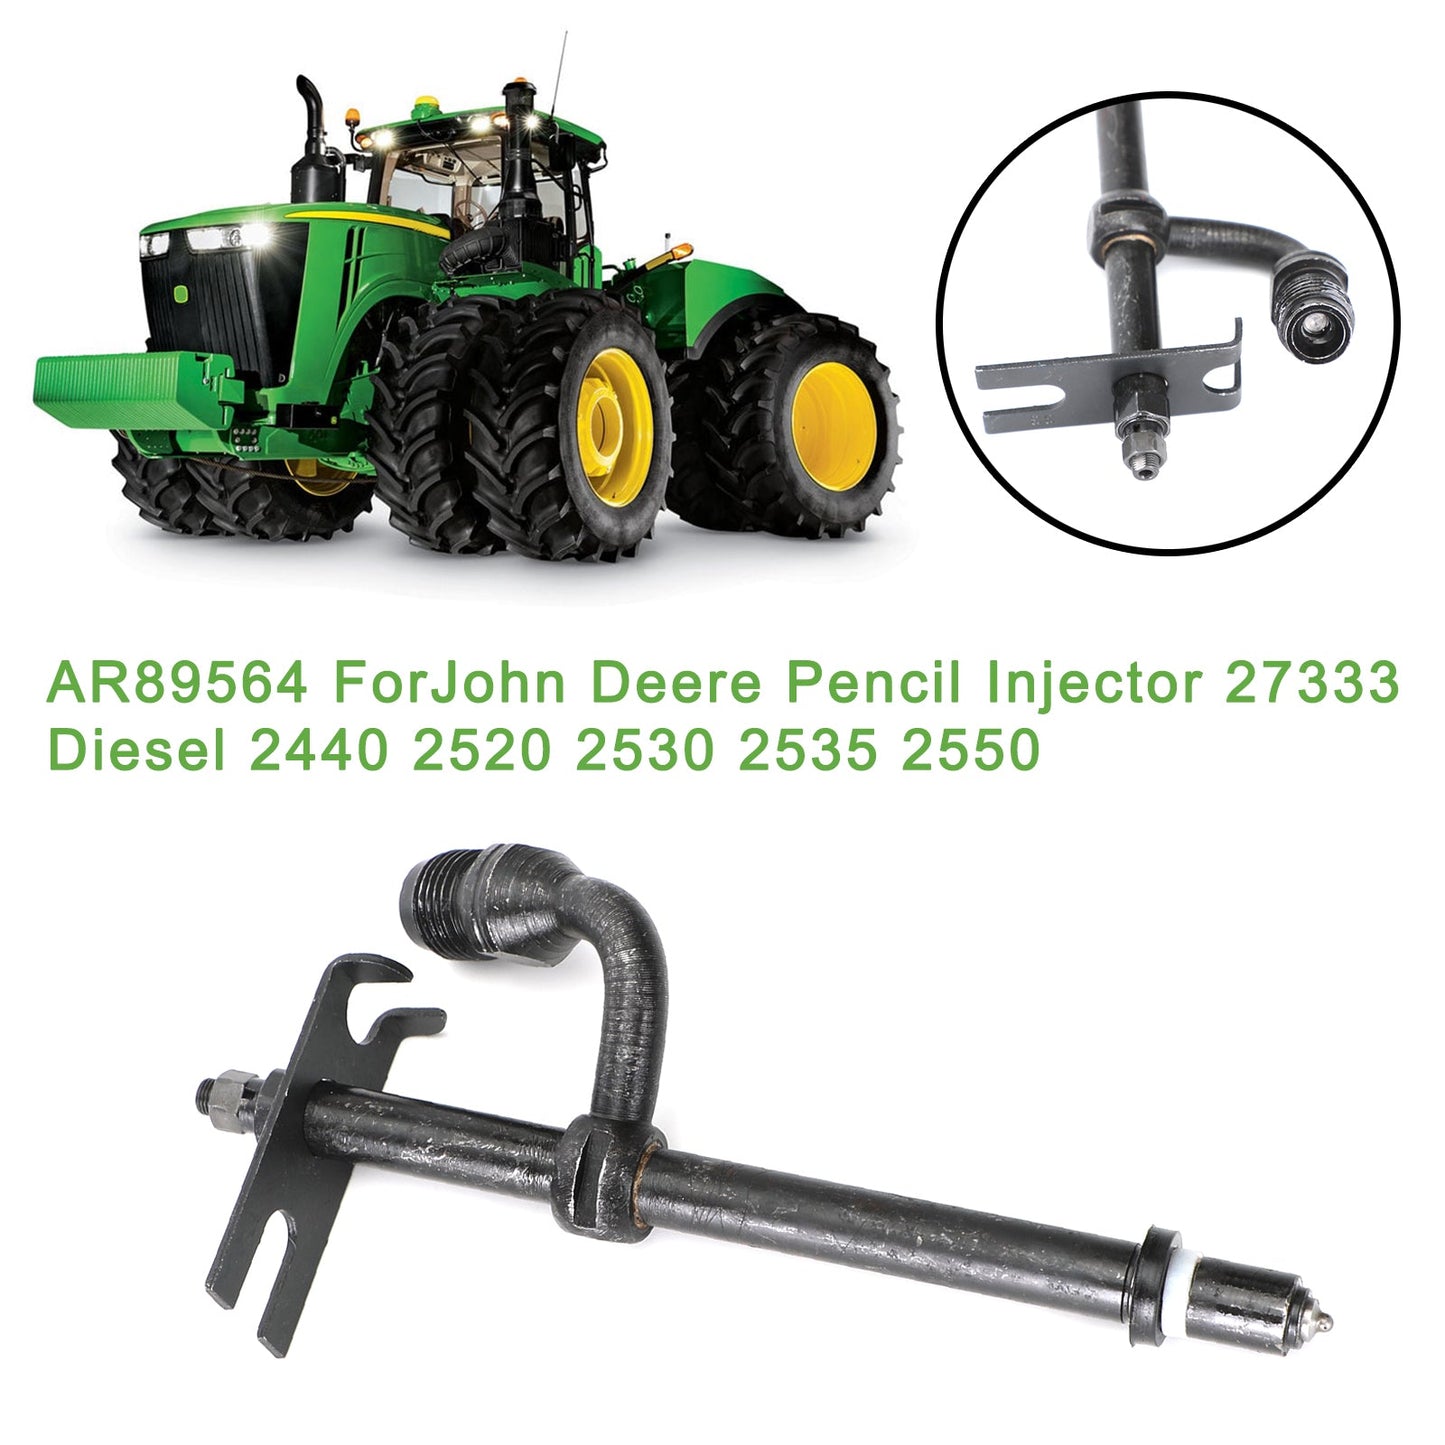 AR89564 For John Deere Pencil Injector 27333 Diesel 2440 2520 2530 2535 2550